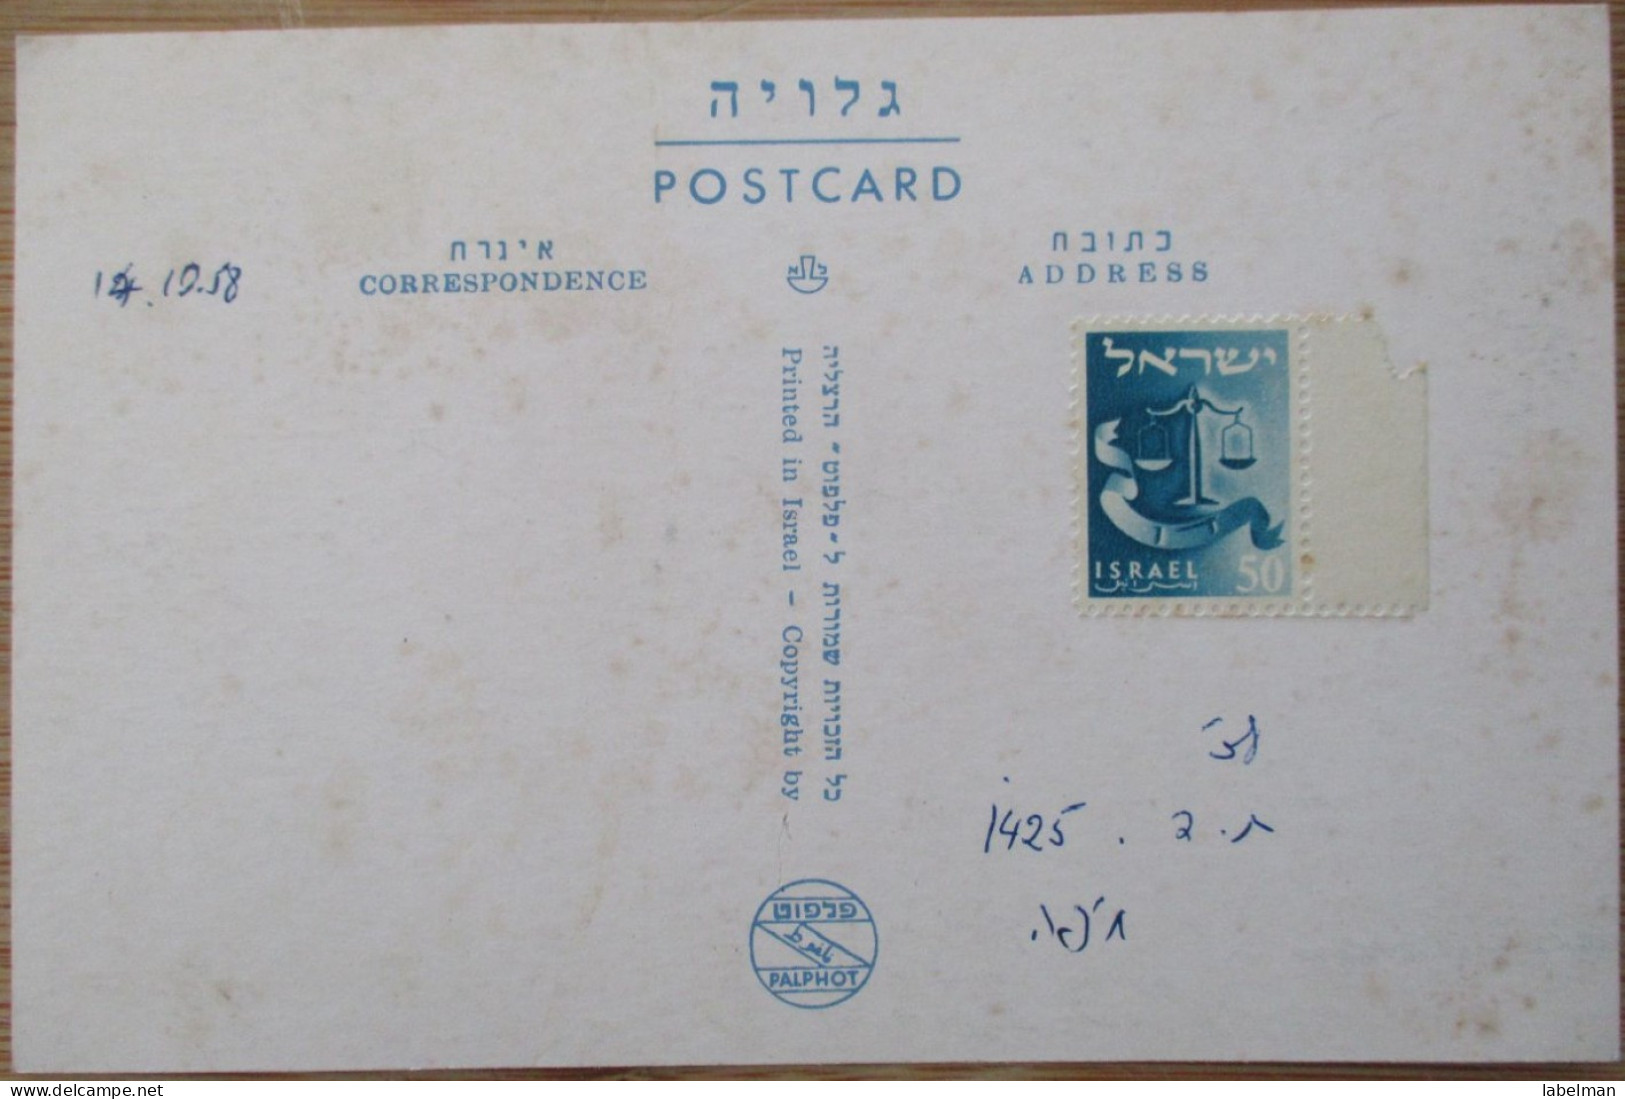 ISRAEL ACRE FISHERMAN PIER PORT WALLS OTTOMAN TEMPLAR POSTCARD PHOTO CARD ANSICHTSKARTE CARTOLINA CARTE POSTALE KARTE - Israel